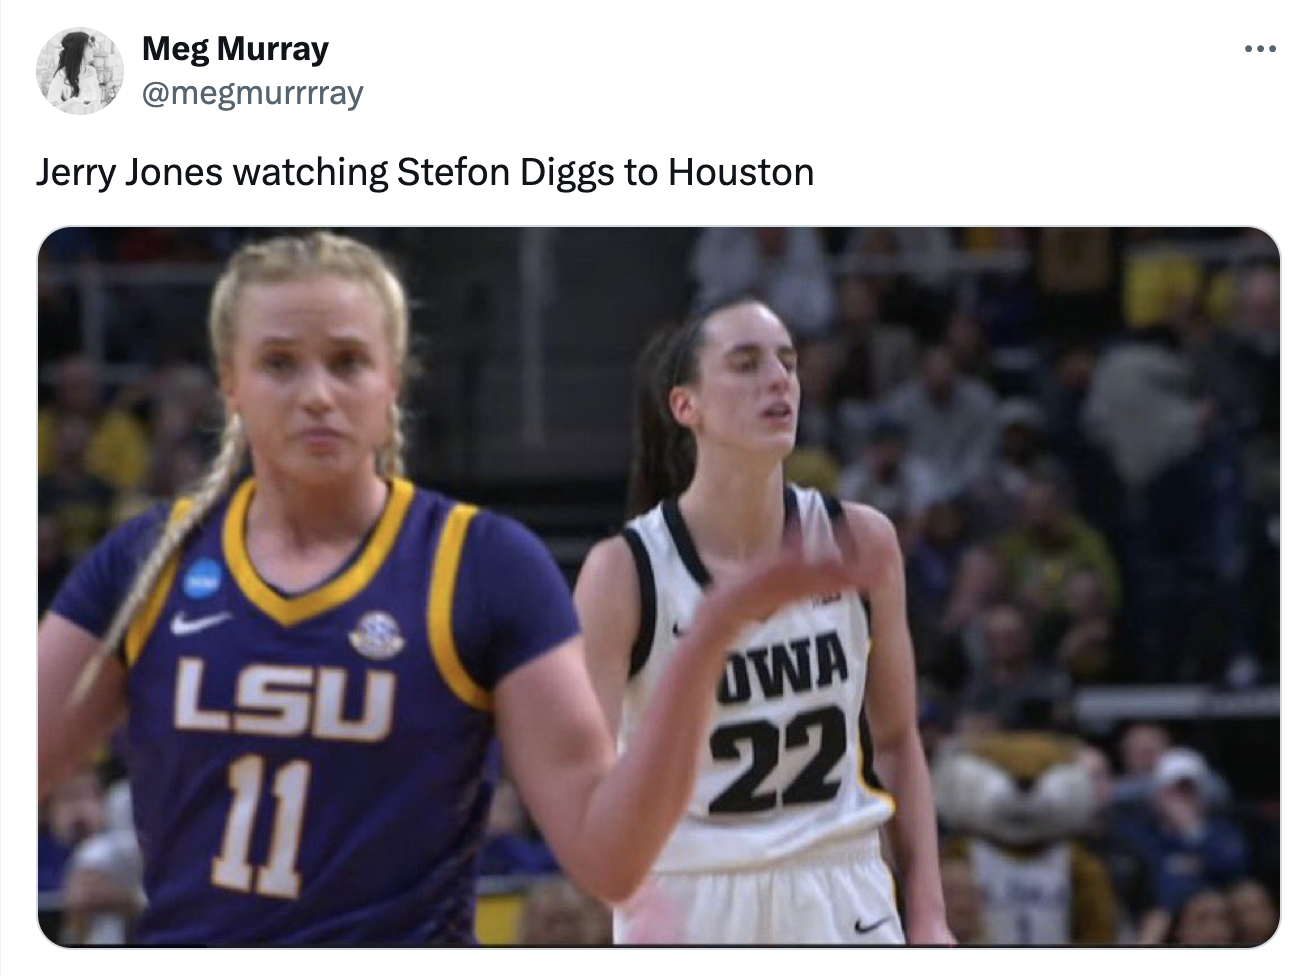 basketball player - Meg Murray Jerry Jones watching Stefon Diggs to Houston Lsu Jwa A11 22